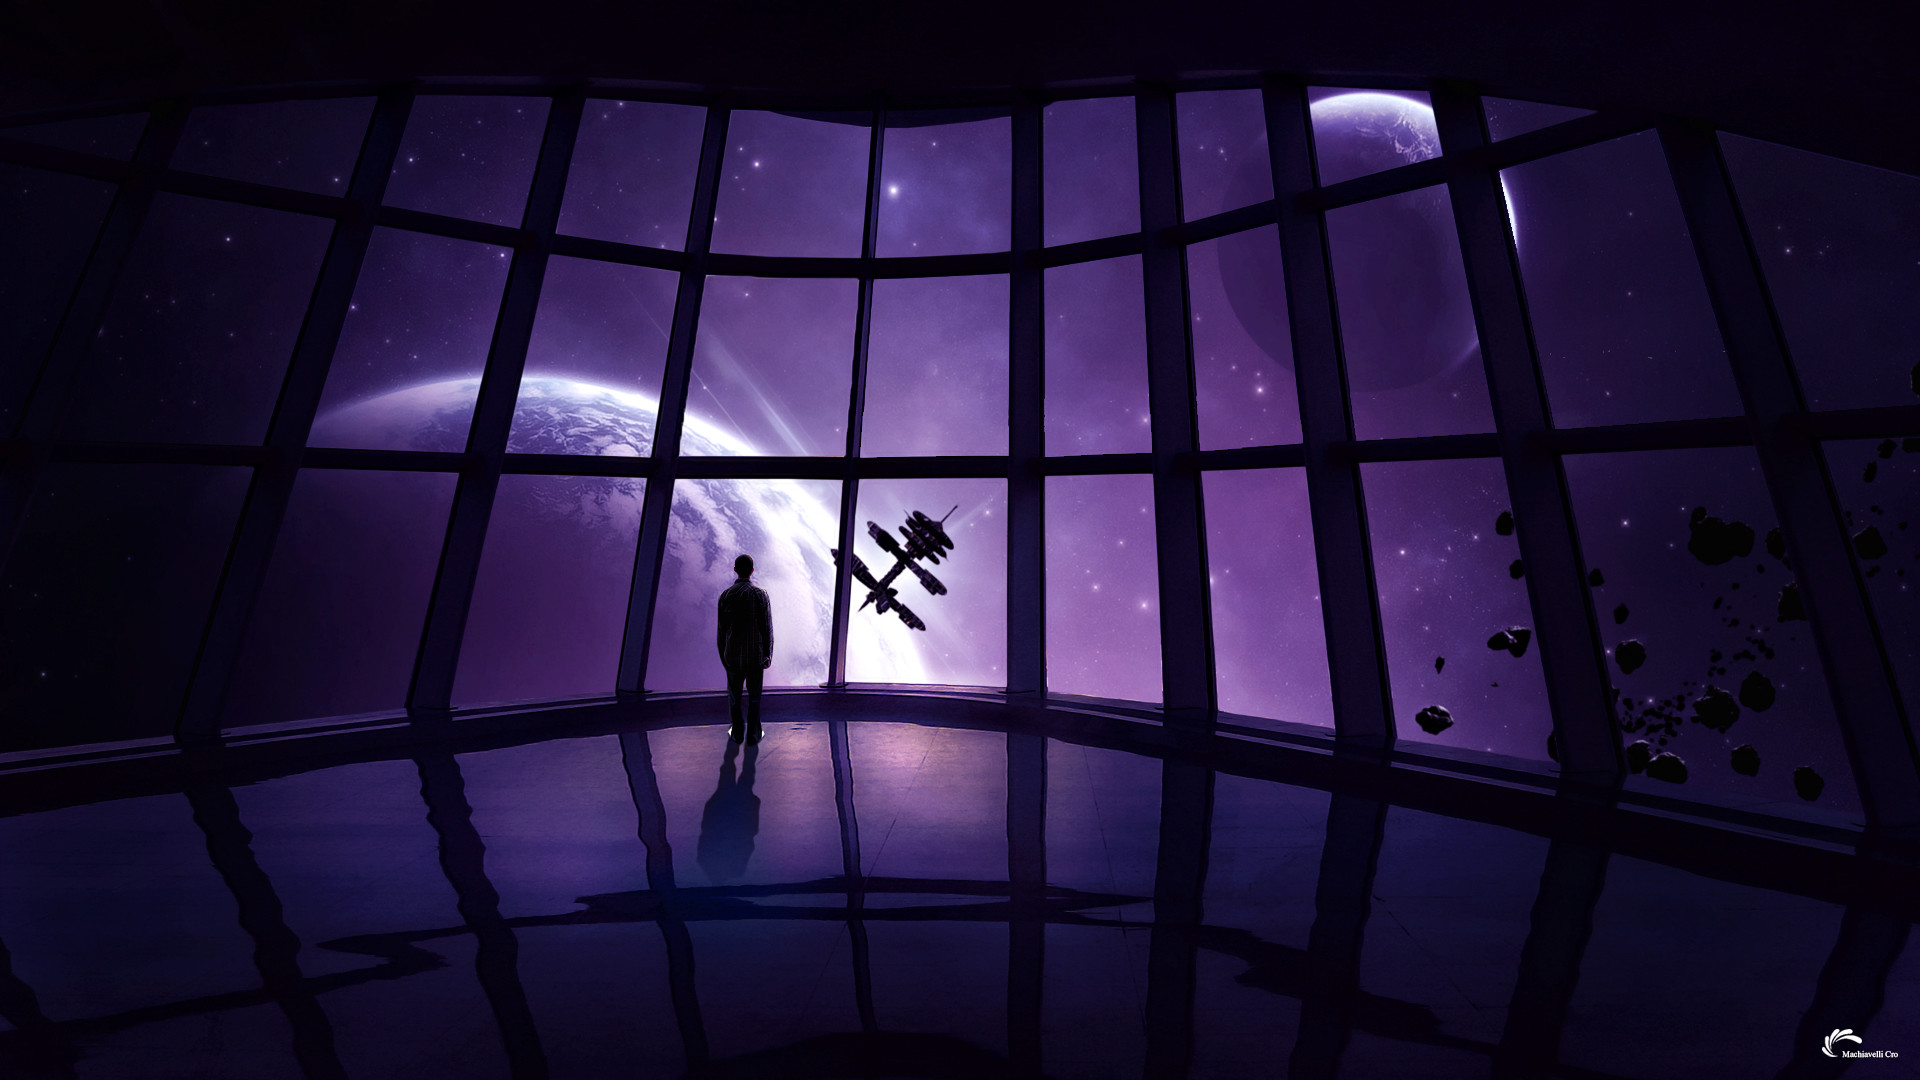 1920x1080 sci fi science fiction art artistic spaceship spacecraft window people  satellite planets moon stars purple dark futuristic glass wallpaper b.